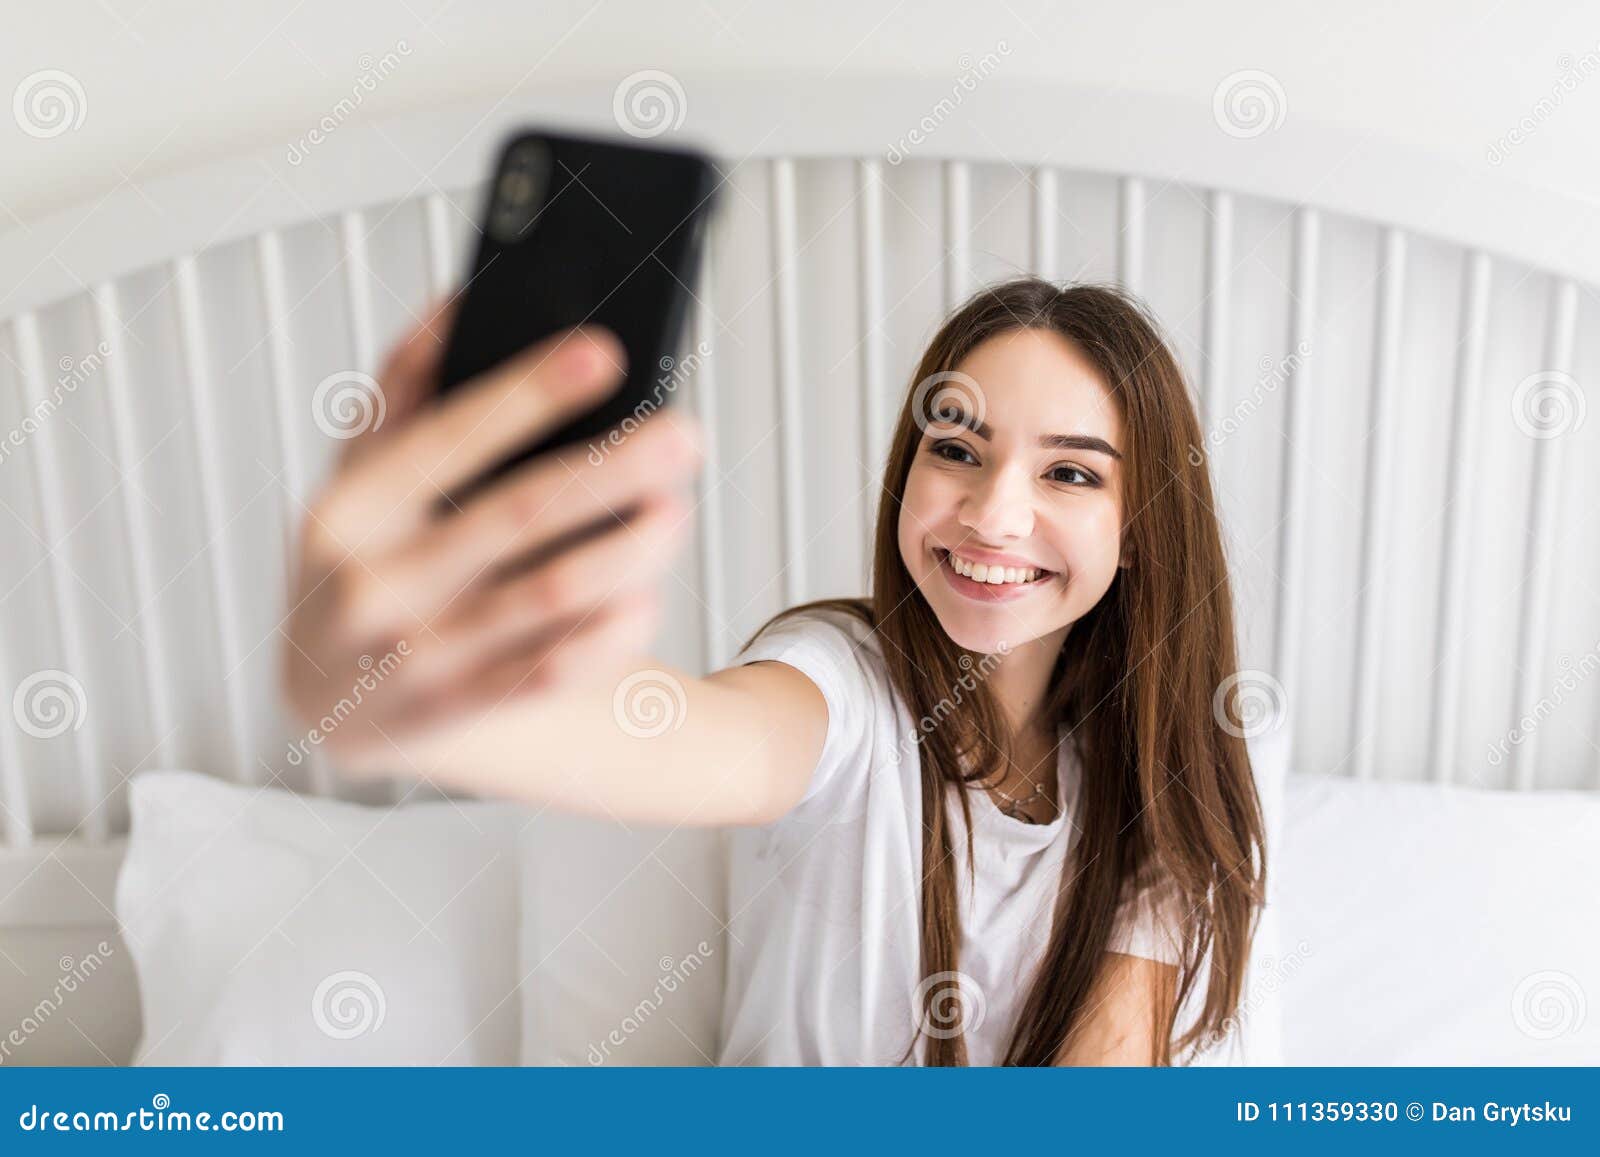 home girlfriend making selfy